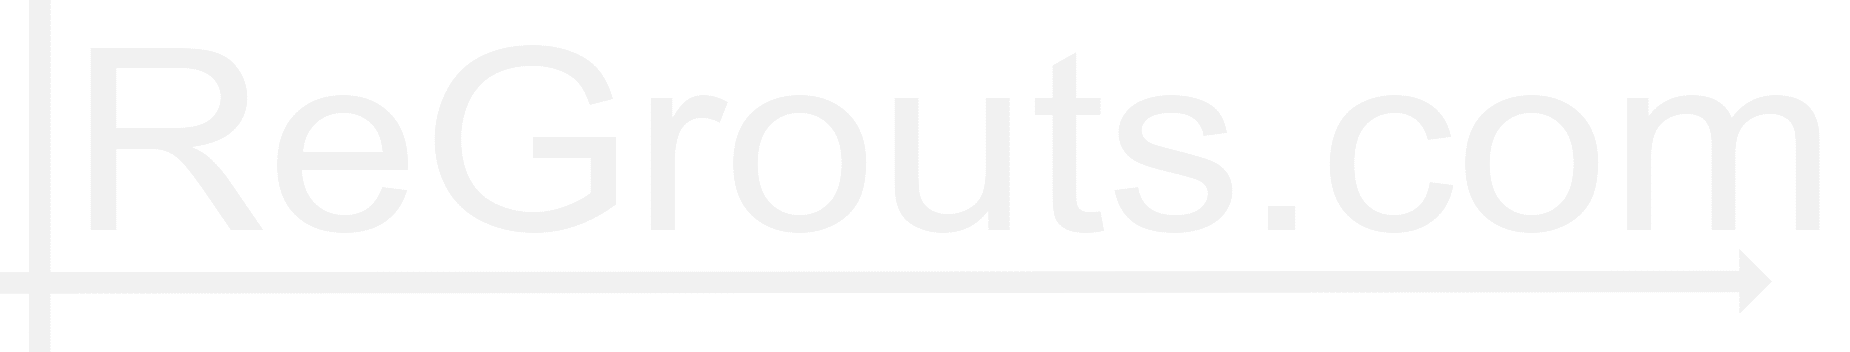 ReGrouts.com Logo1 White